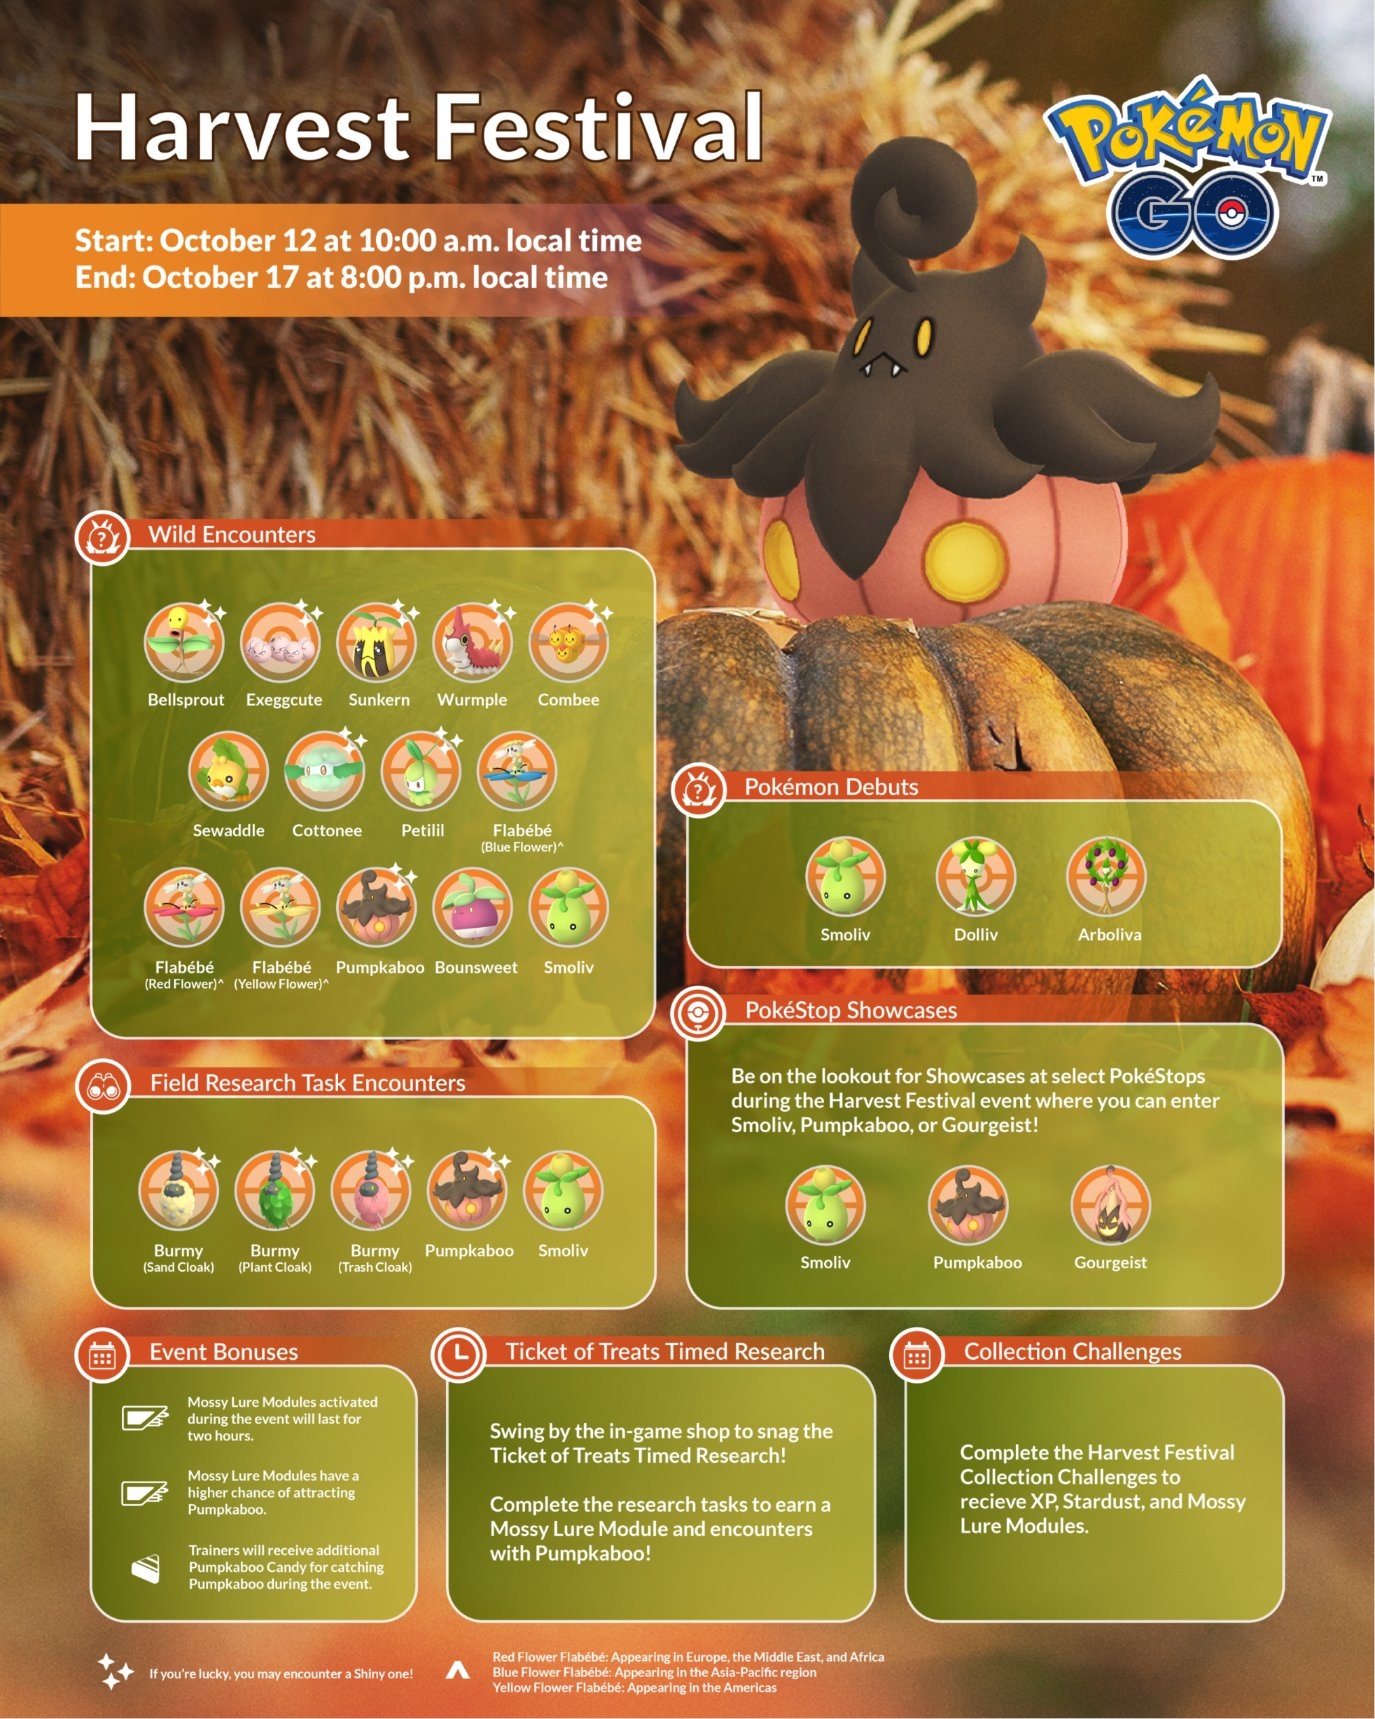 Pokémon GO - Harvest Festival event - Infographic